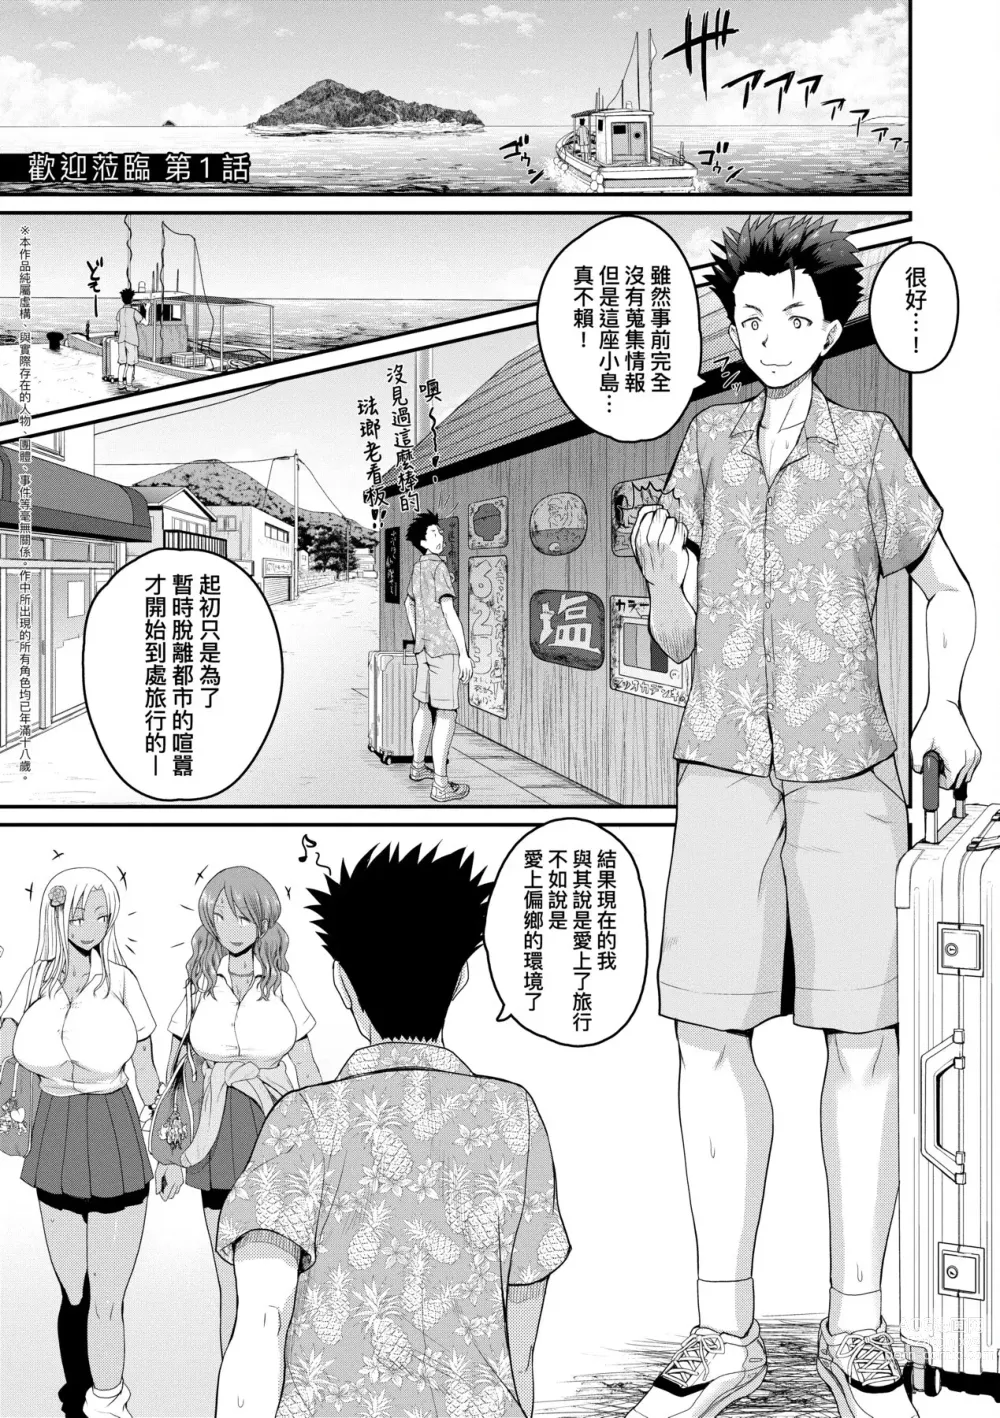 Page 10 of manga 歡迎蒞臨！SEX無限制之島到底是怎樣？